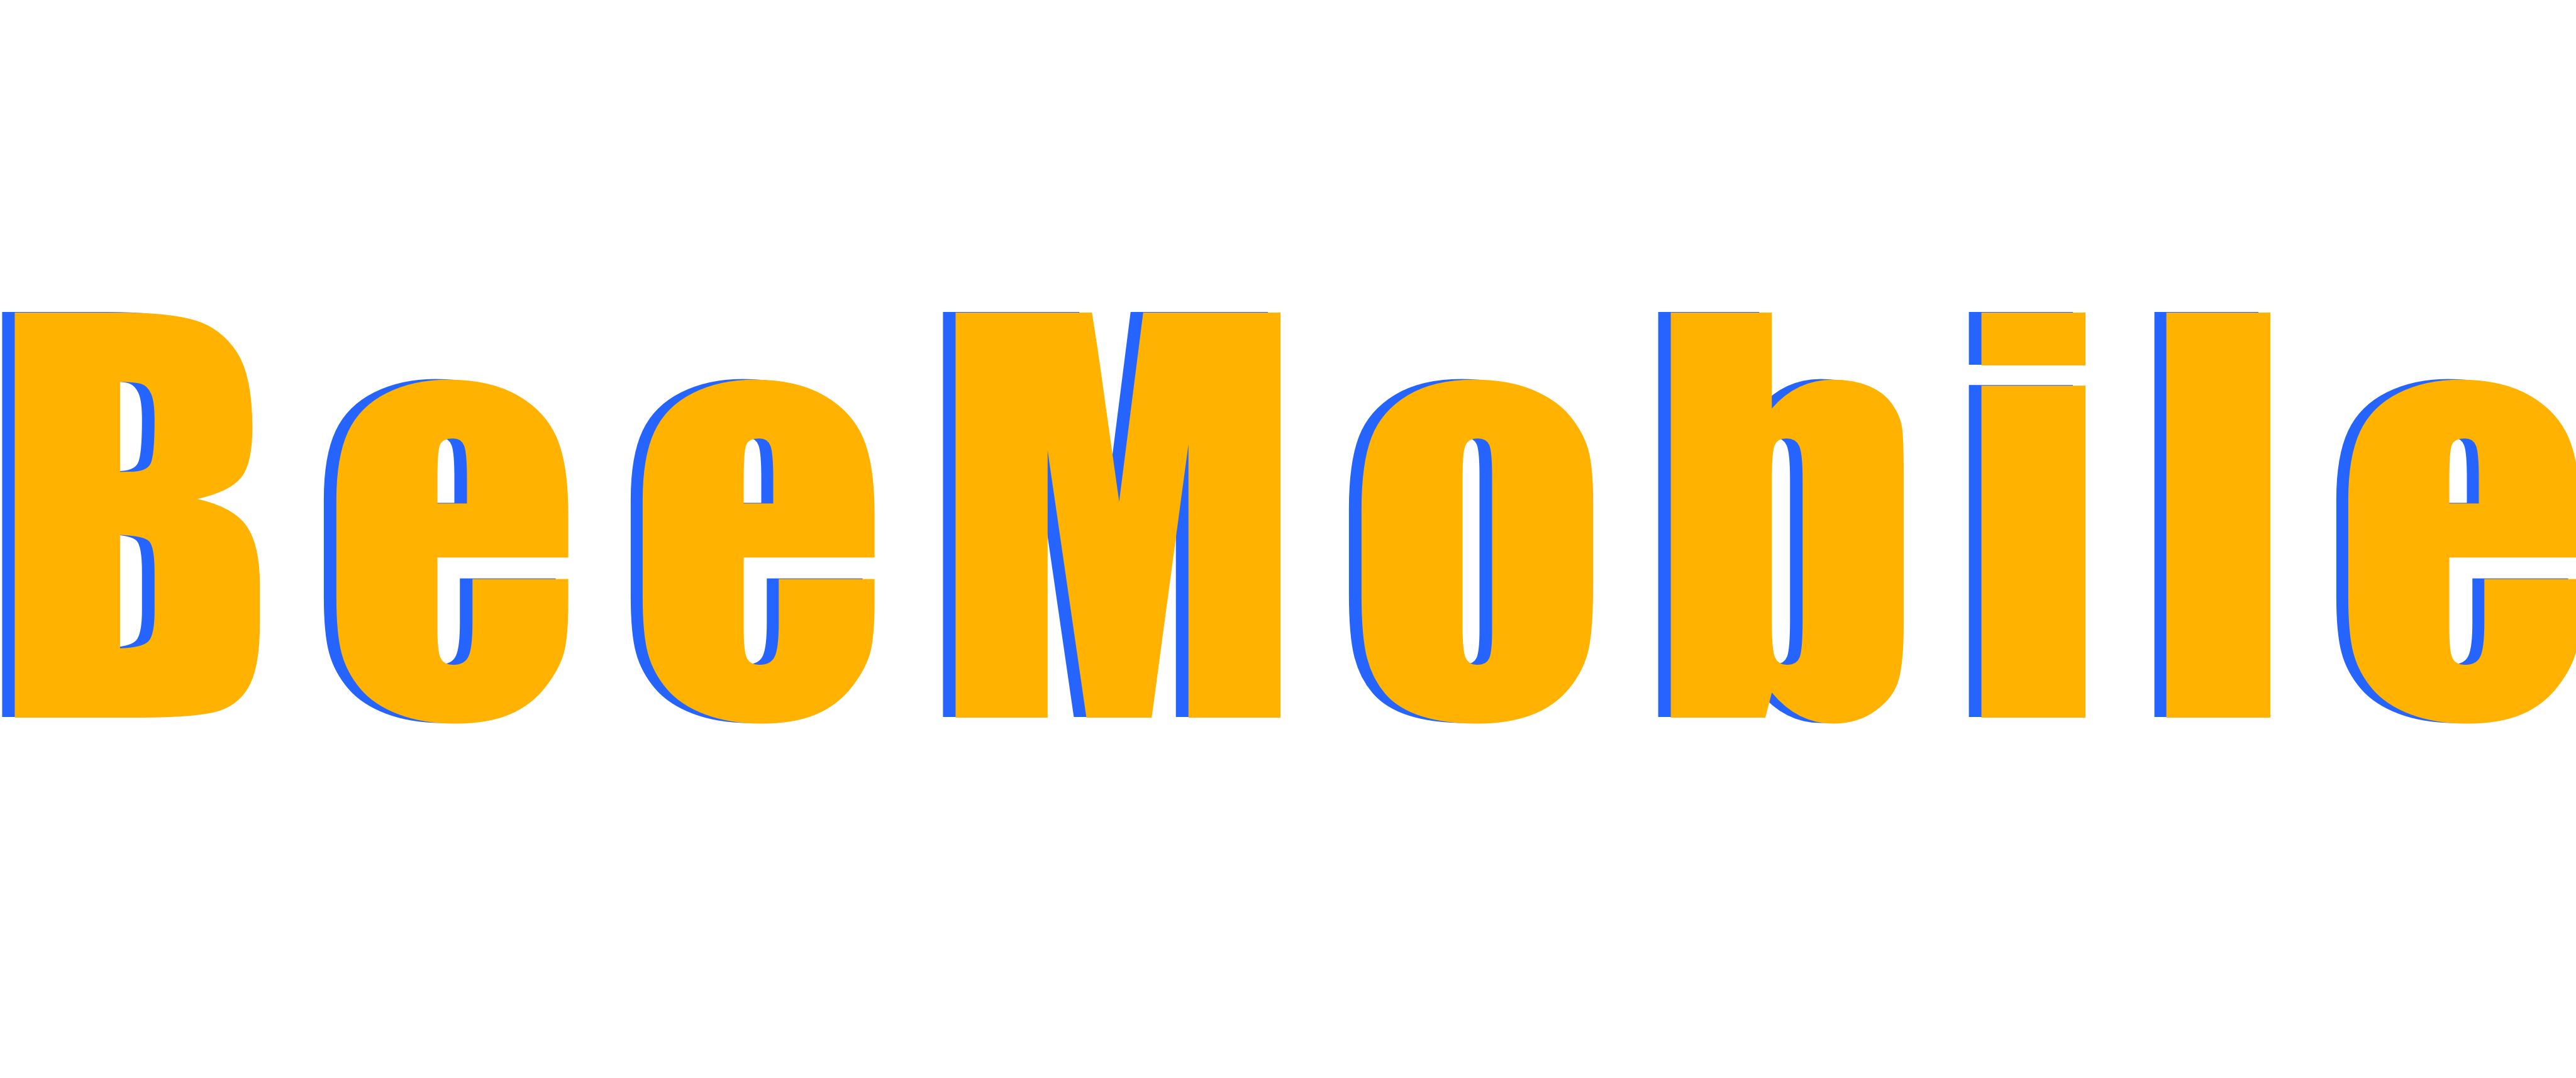 BeeMobil